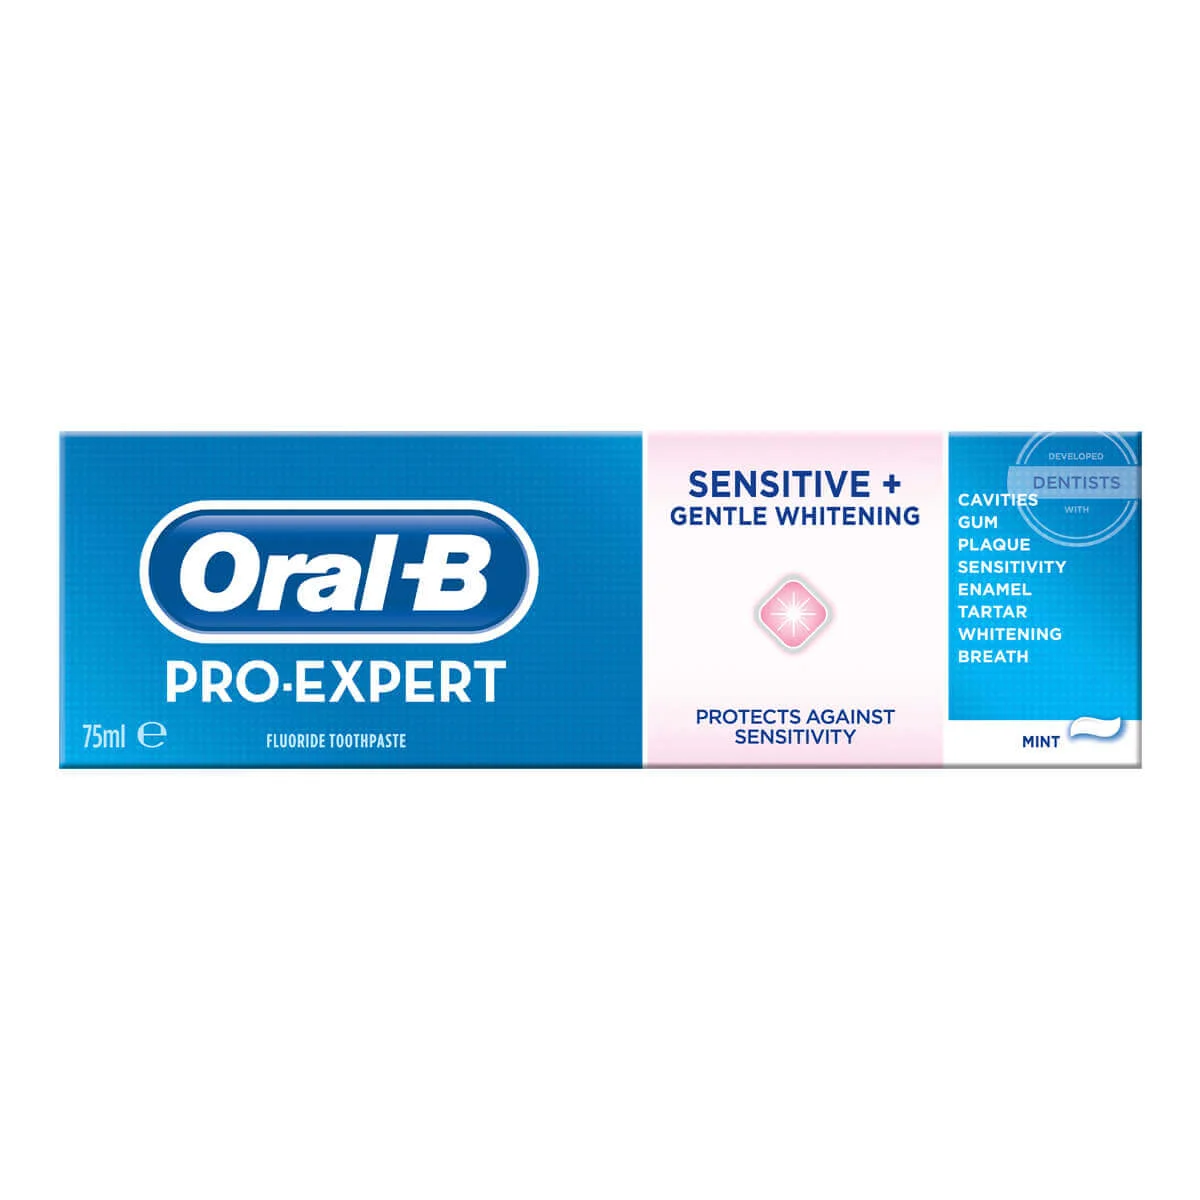 Oral-B Pro-Expert Sensitive + Gentle Whitening Toothpaste 